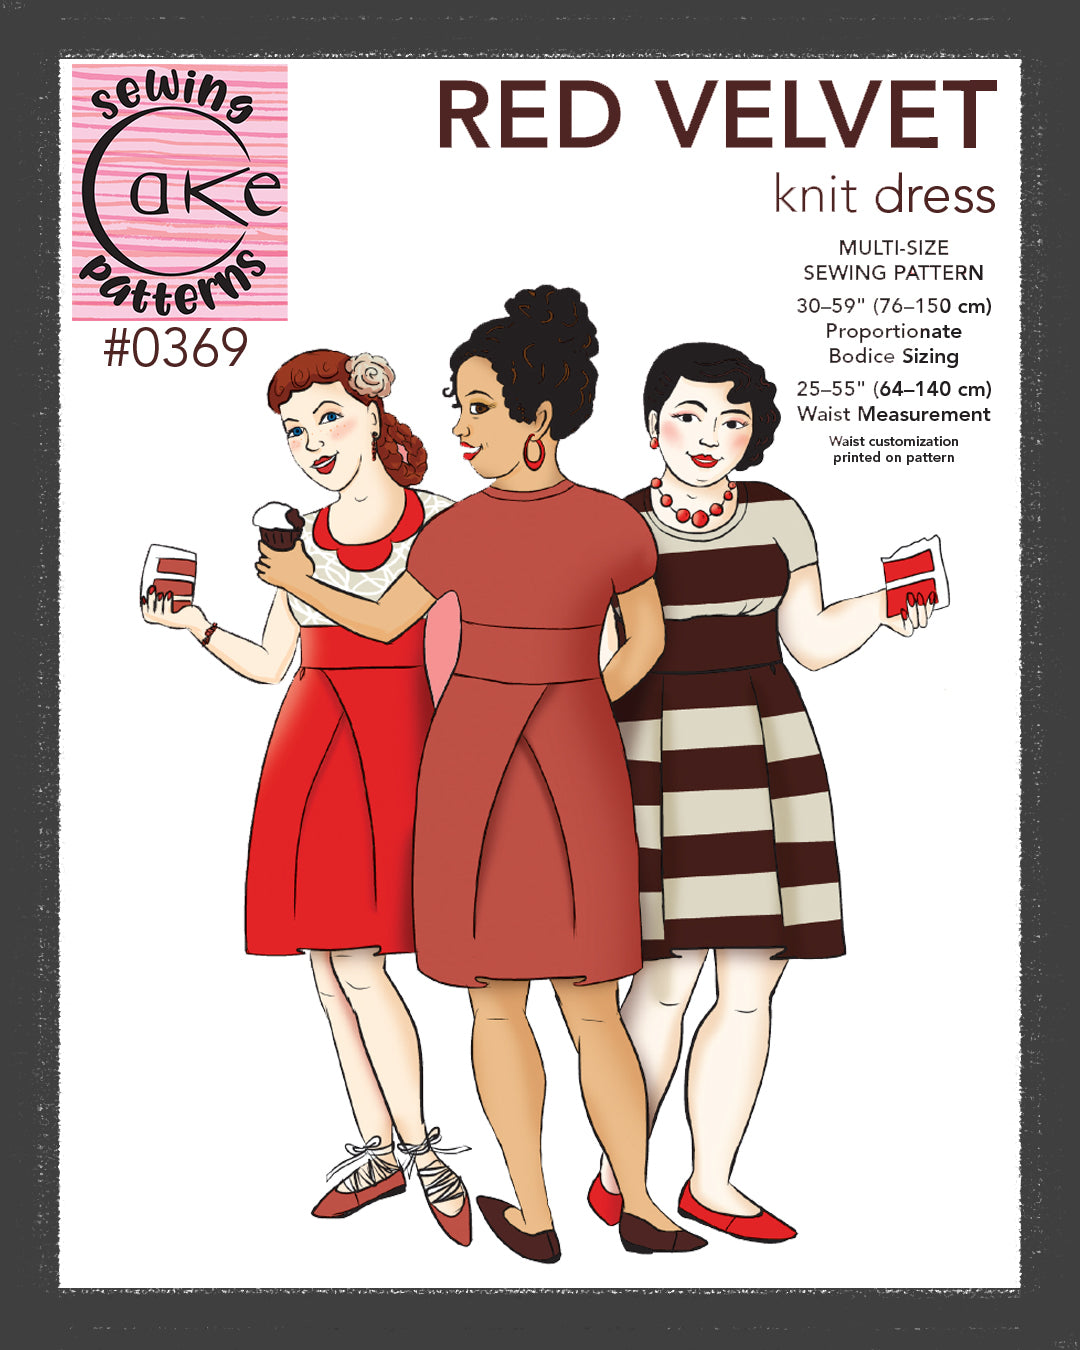 SEWING CAKE 0369 - RED VELVET KNIT DRESS (PDF)